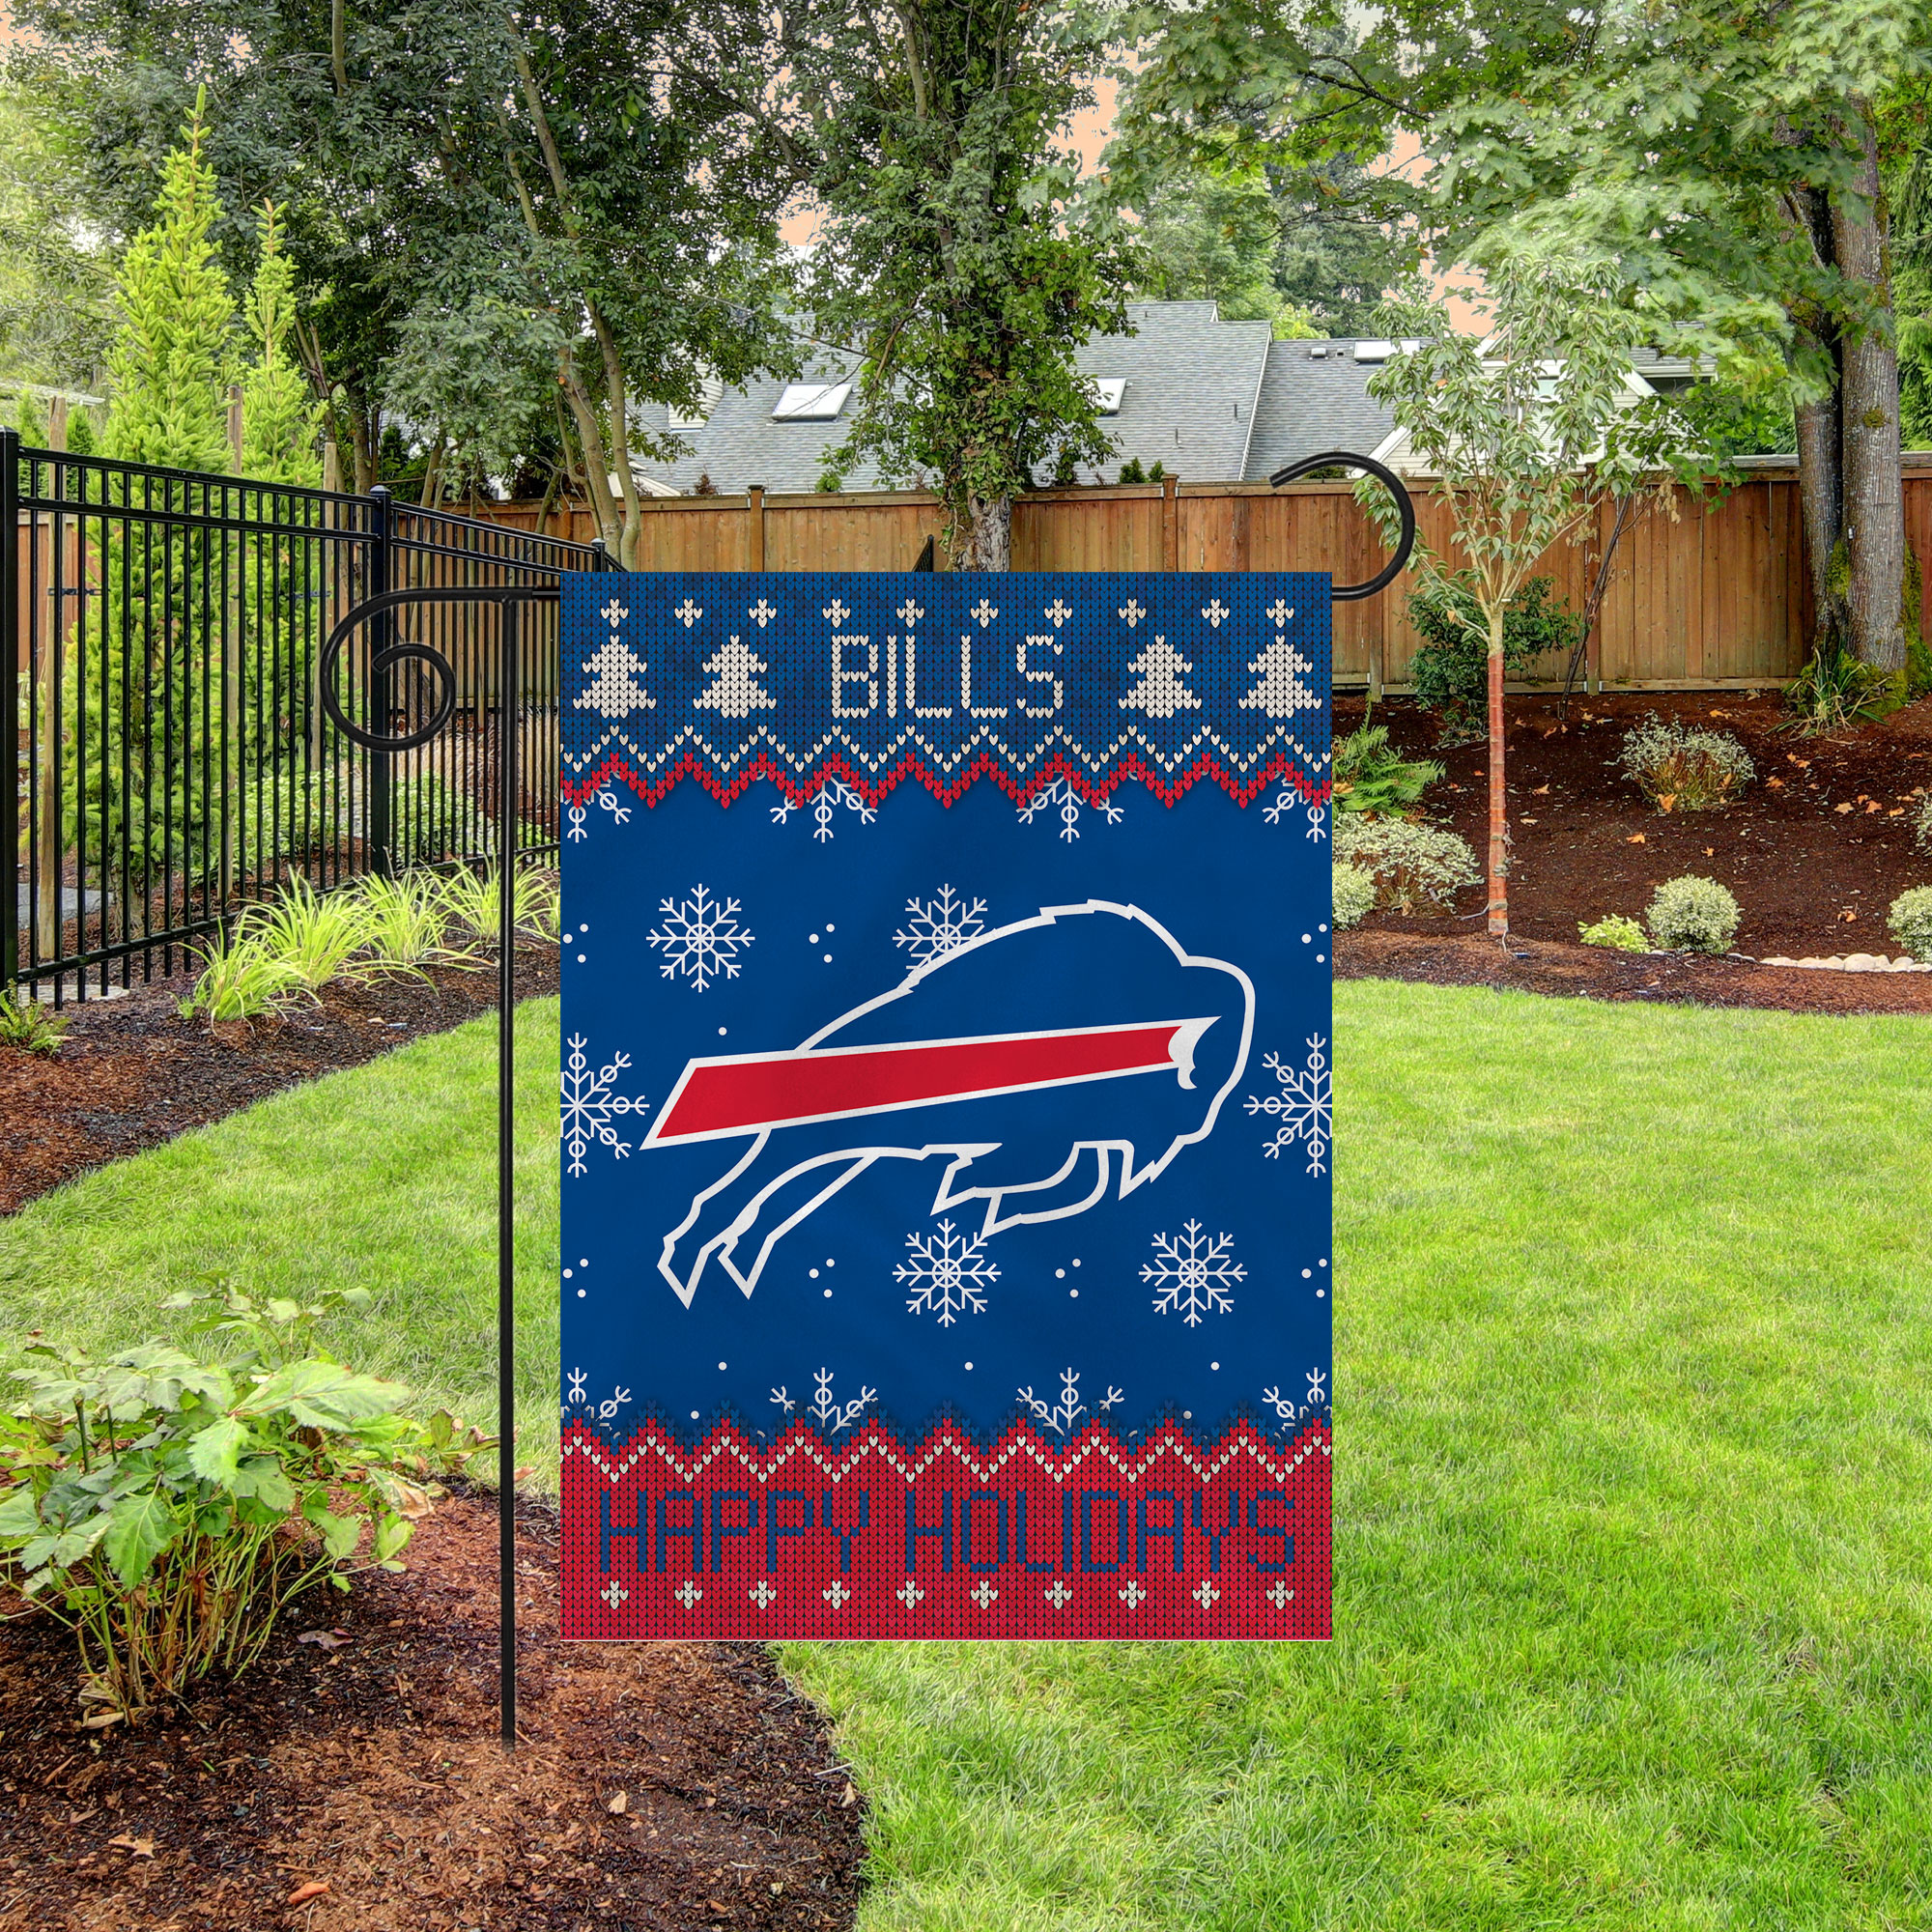 Rico Industries NFL Football Buffalo Bills Winter/Snowflake Double Sided Garden Flag